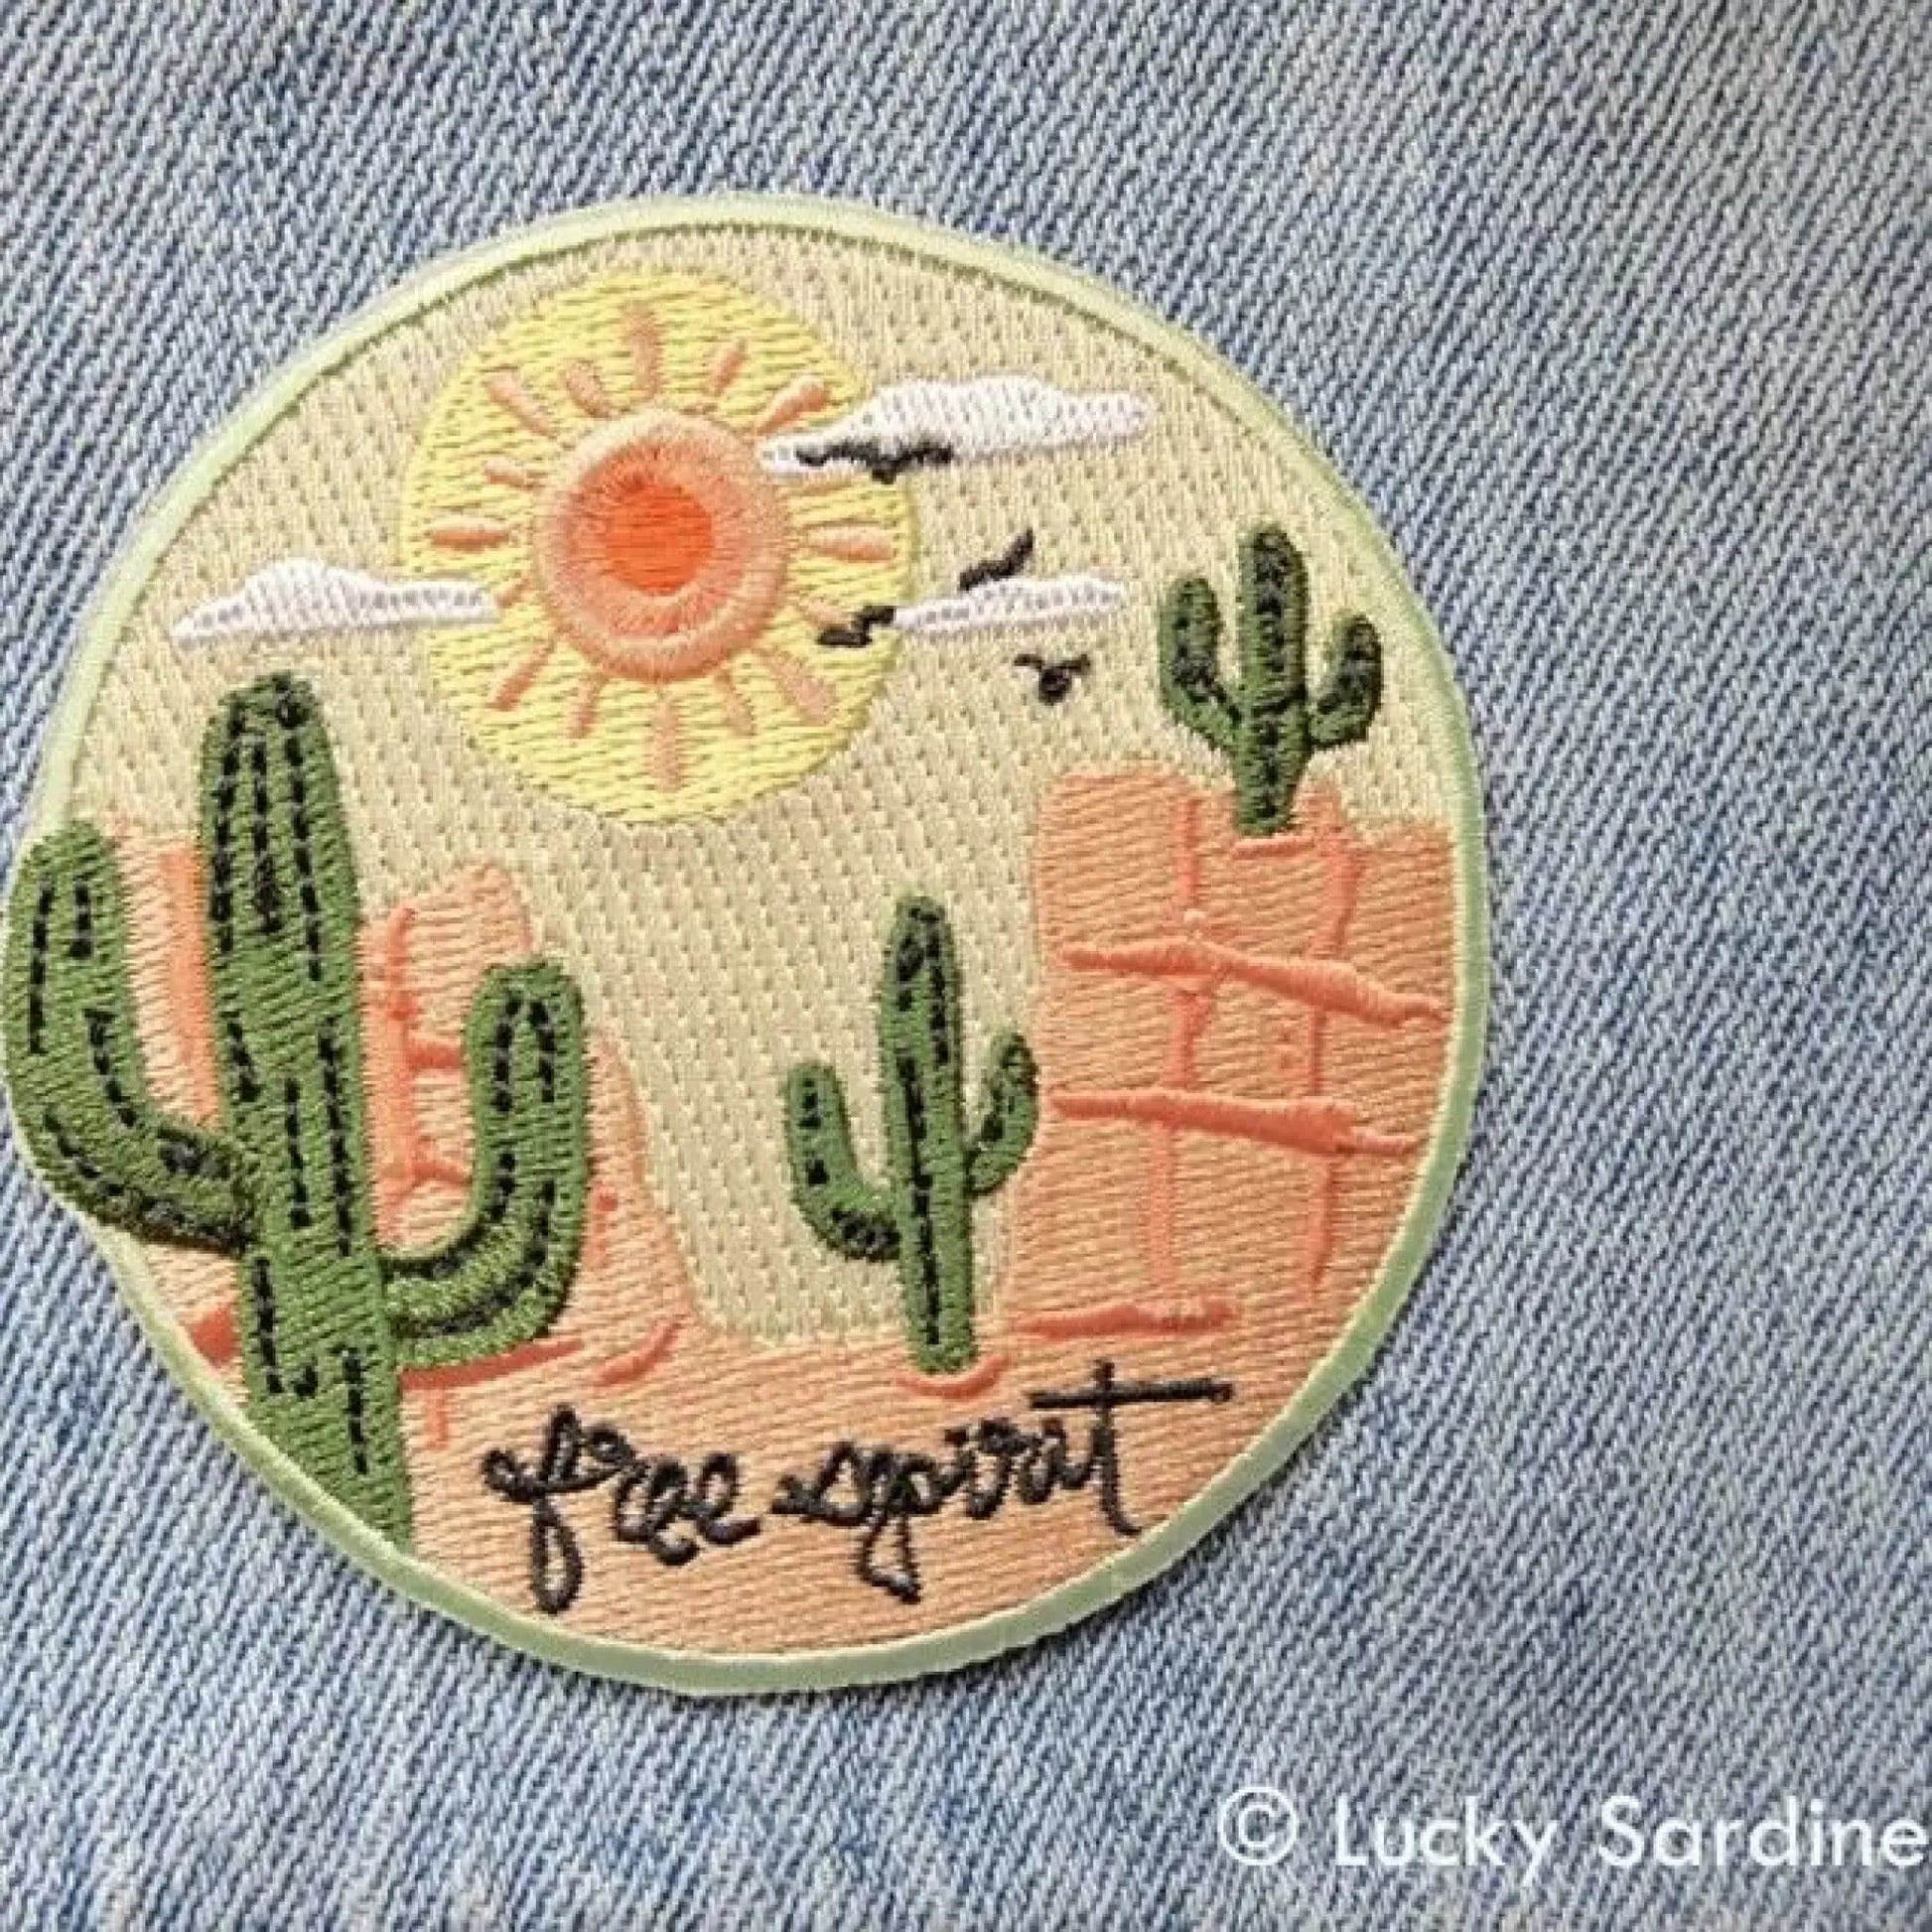 Free Spirit Desert Embroidered Patch